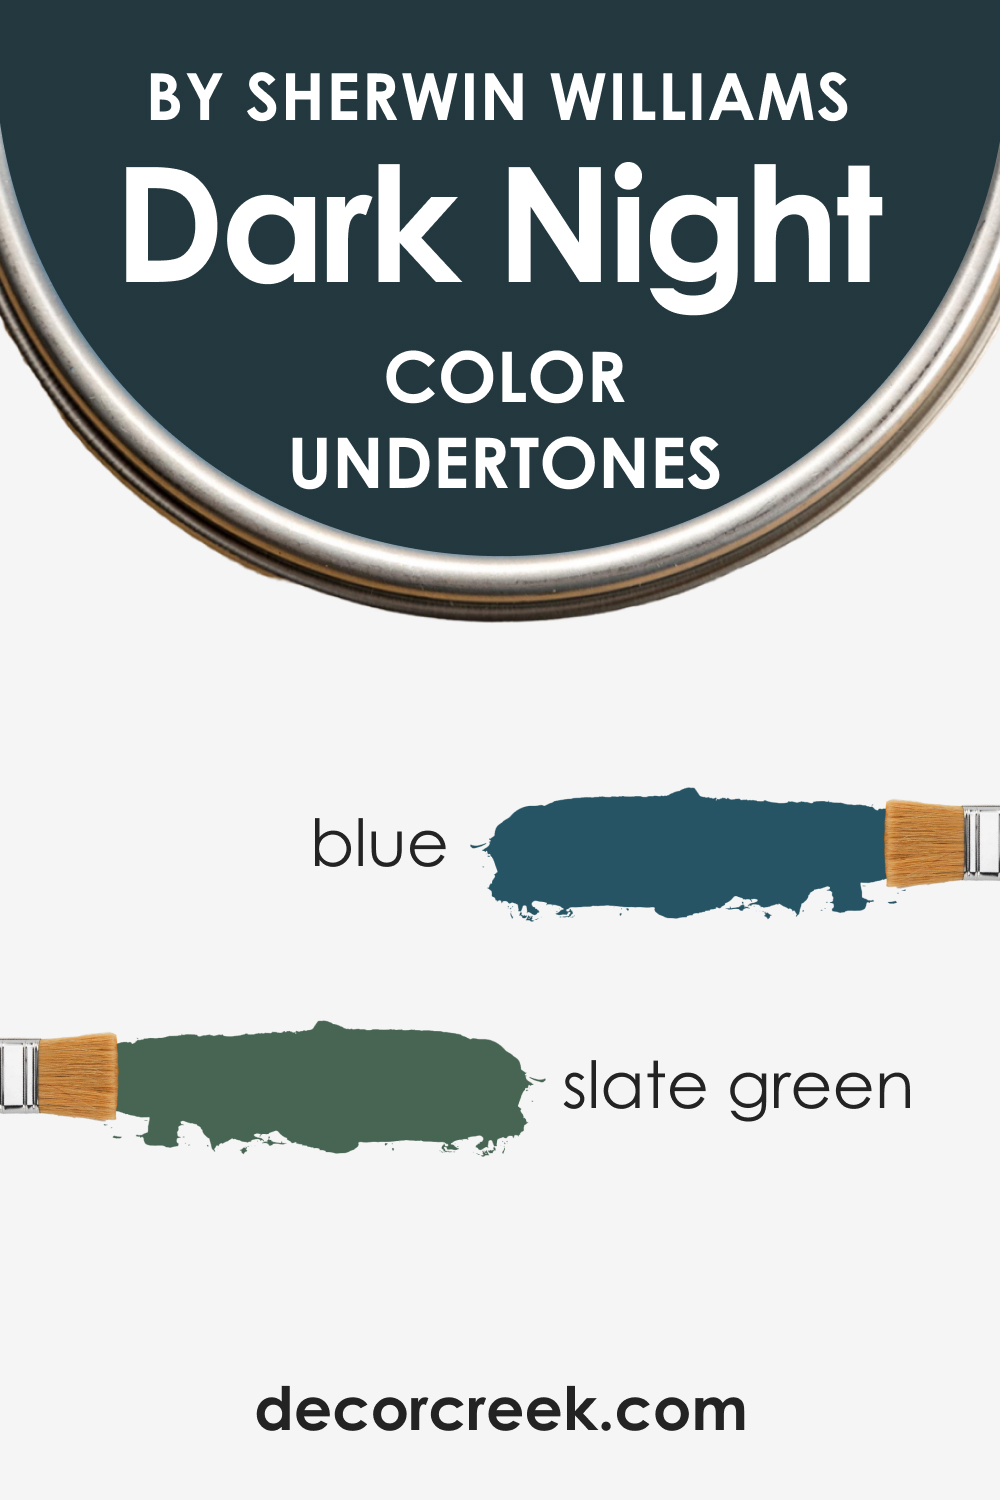 What Undertones Does SW Dark Night Color Have?